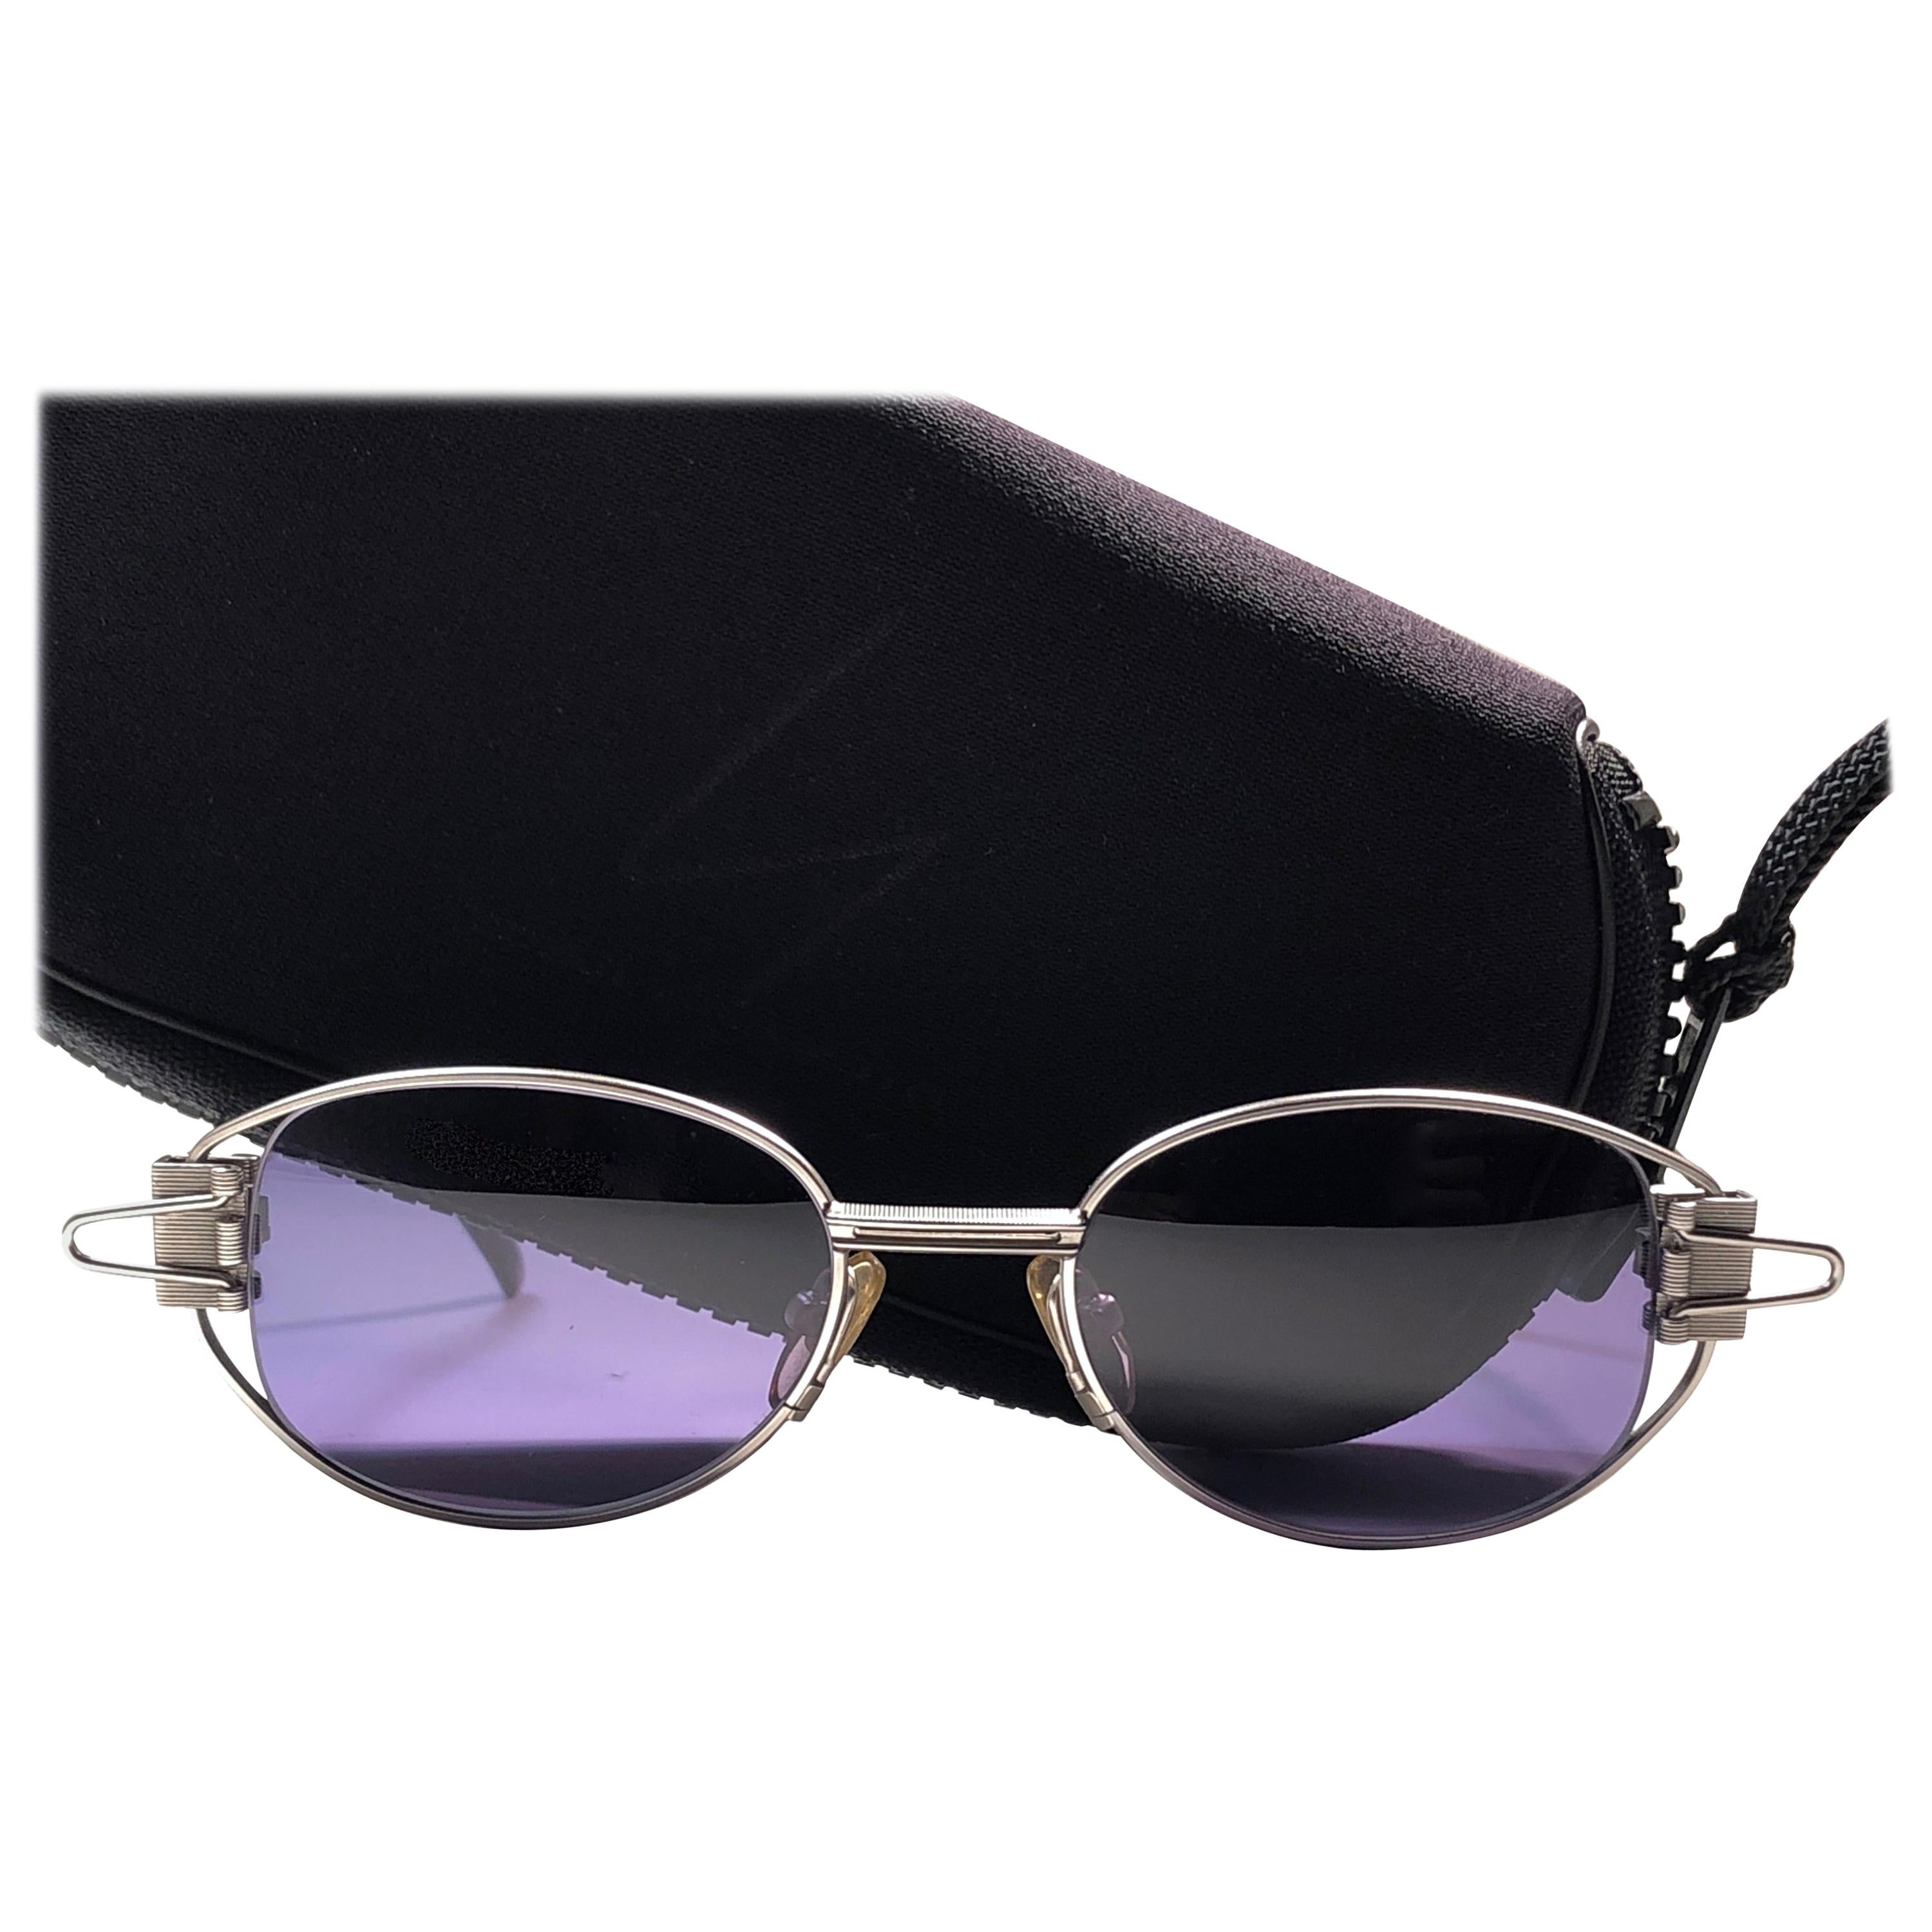 Yohji Yamamoto vintage sunglasses